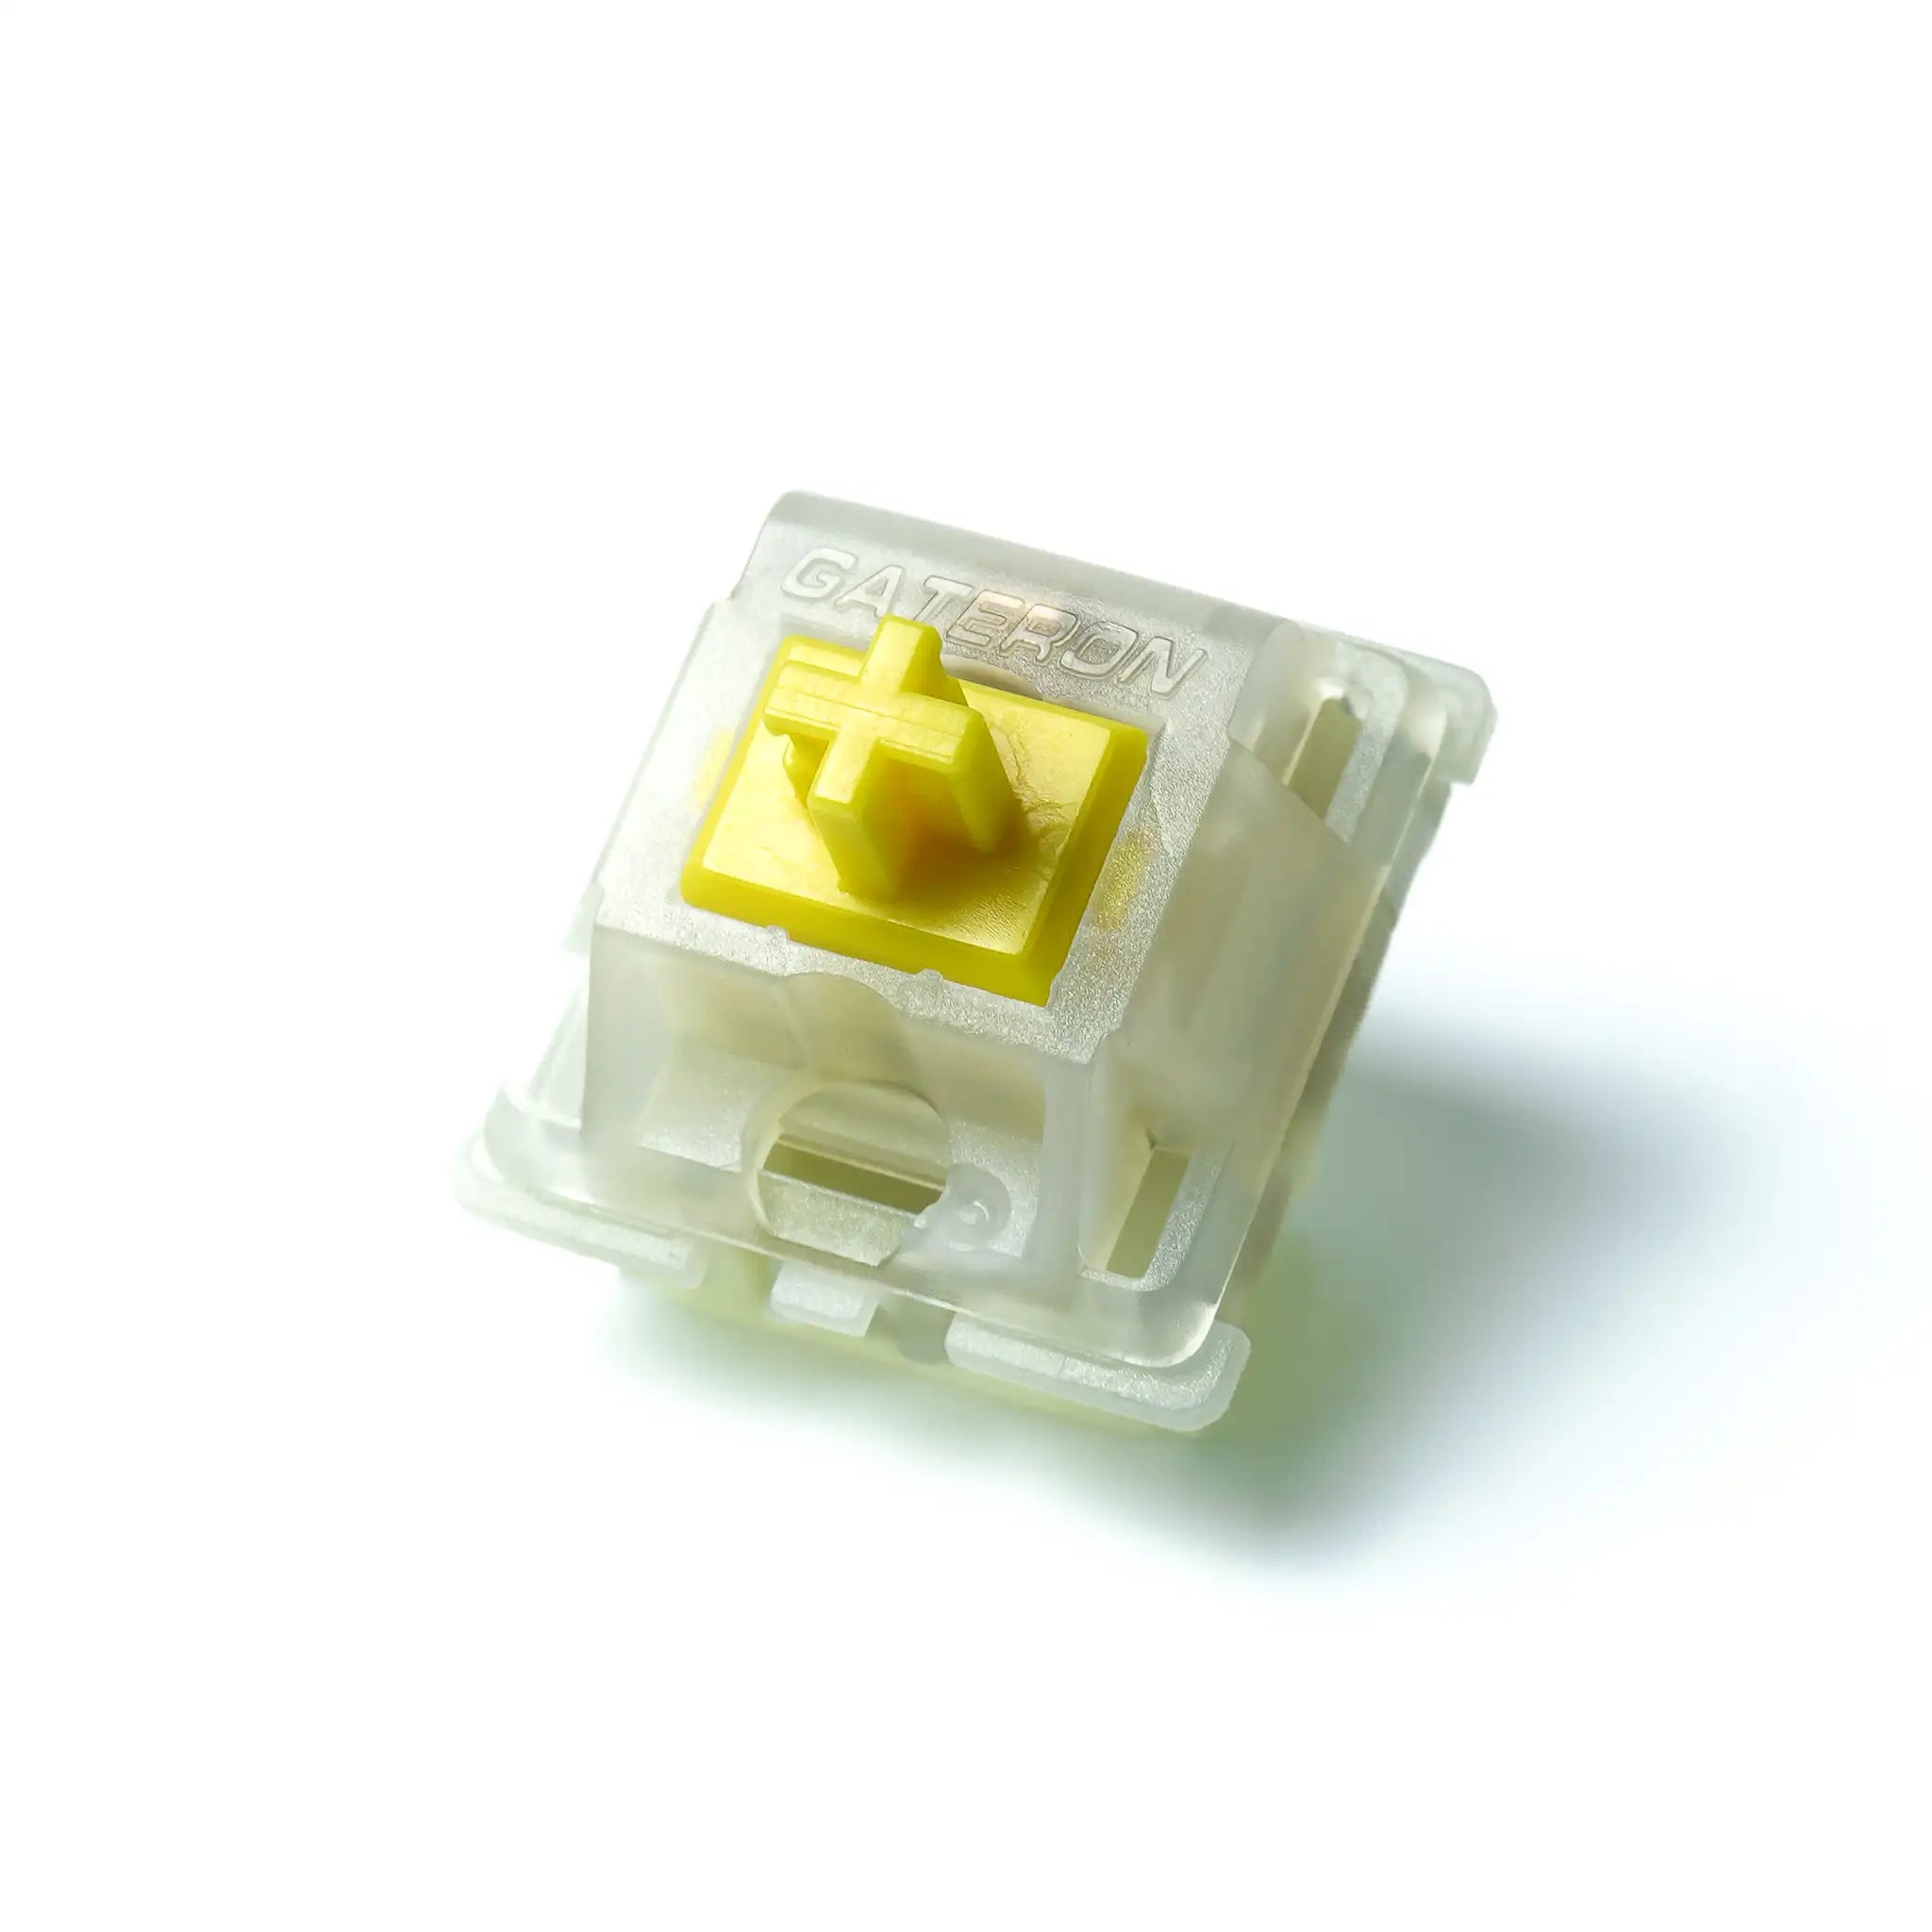 Gateron Milky Yellow Pro Linear Mechanical Keyboard Switches front view - IKASAYA